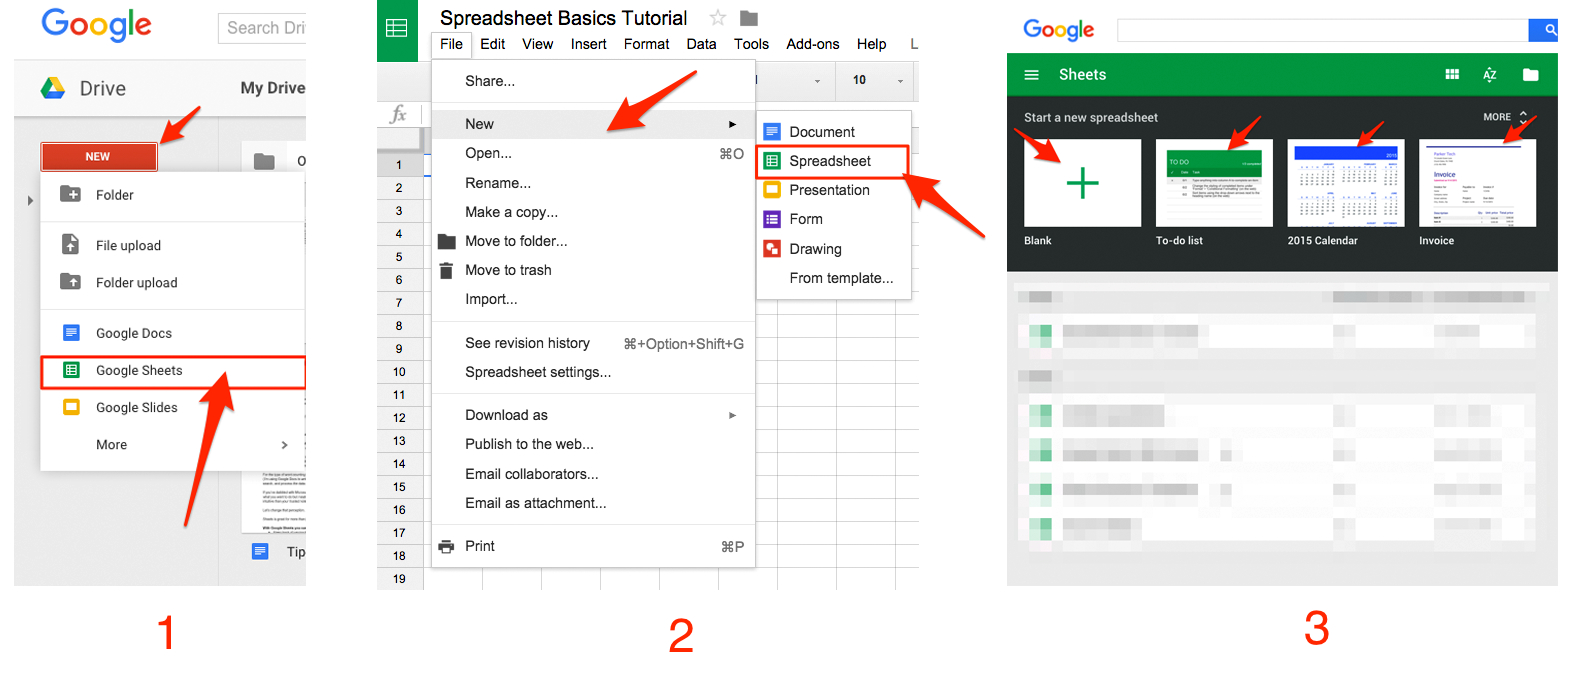 Make A Spreadsheet Online For Google Sheets 101: The Beginner's Guide To Online Spreadsheets  The